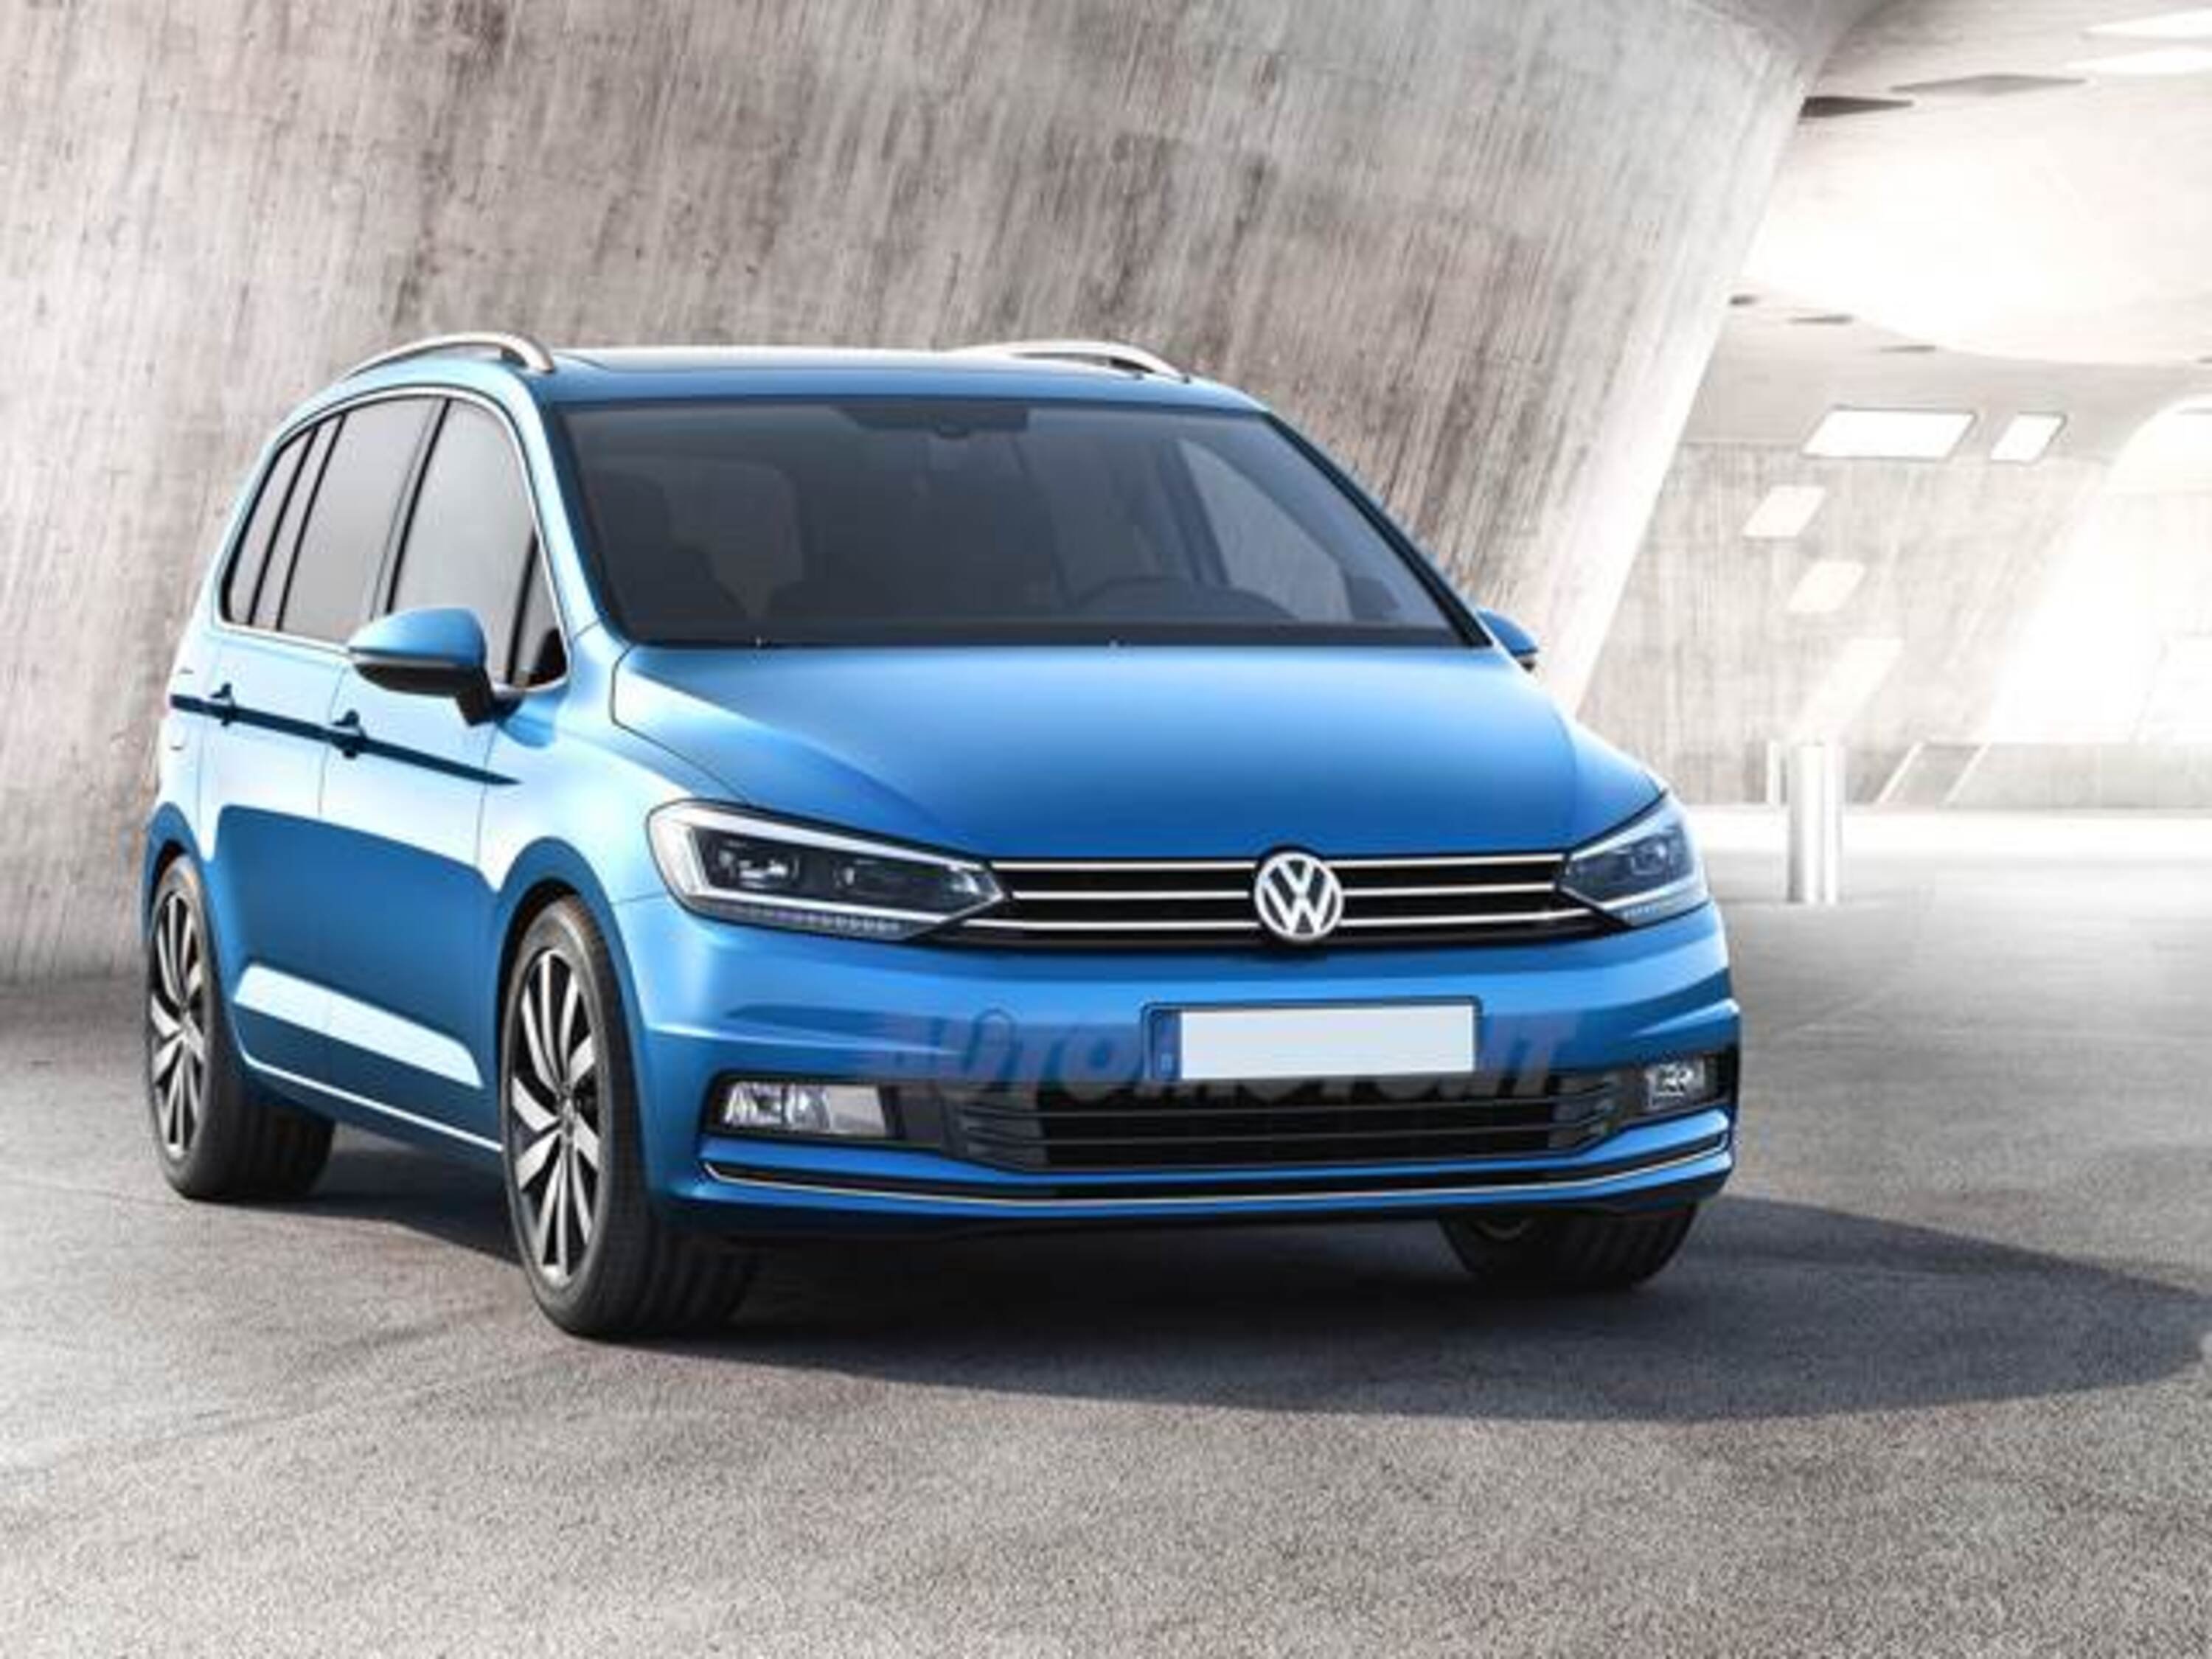 Volkswagen Touran 1.6 TDI Executive BlueMotion Technology